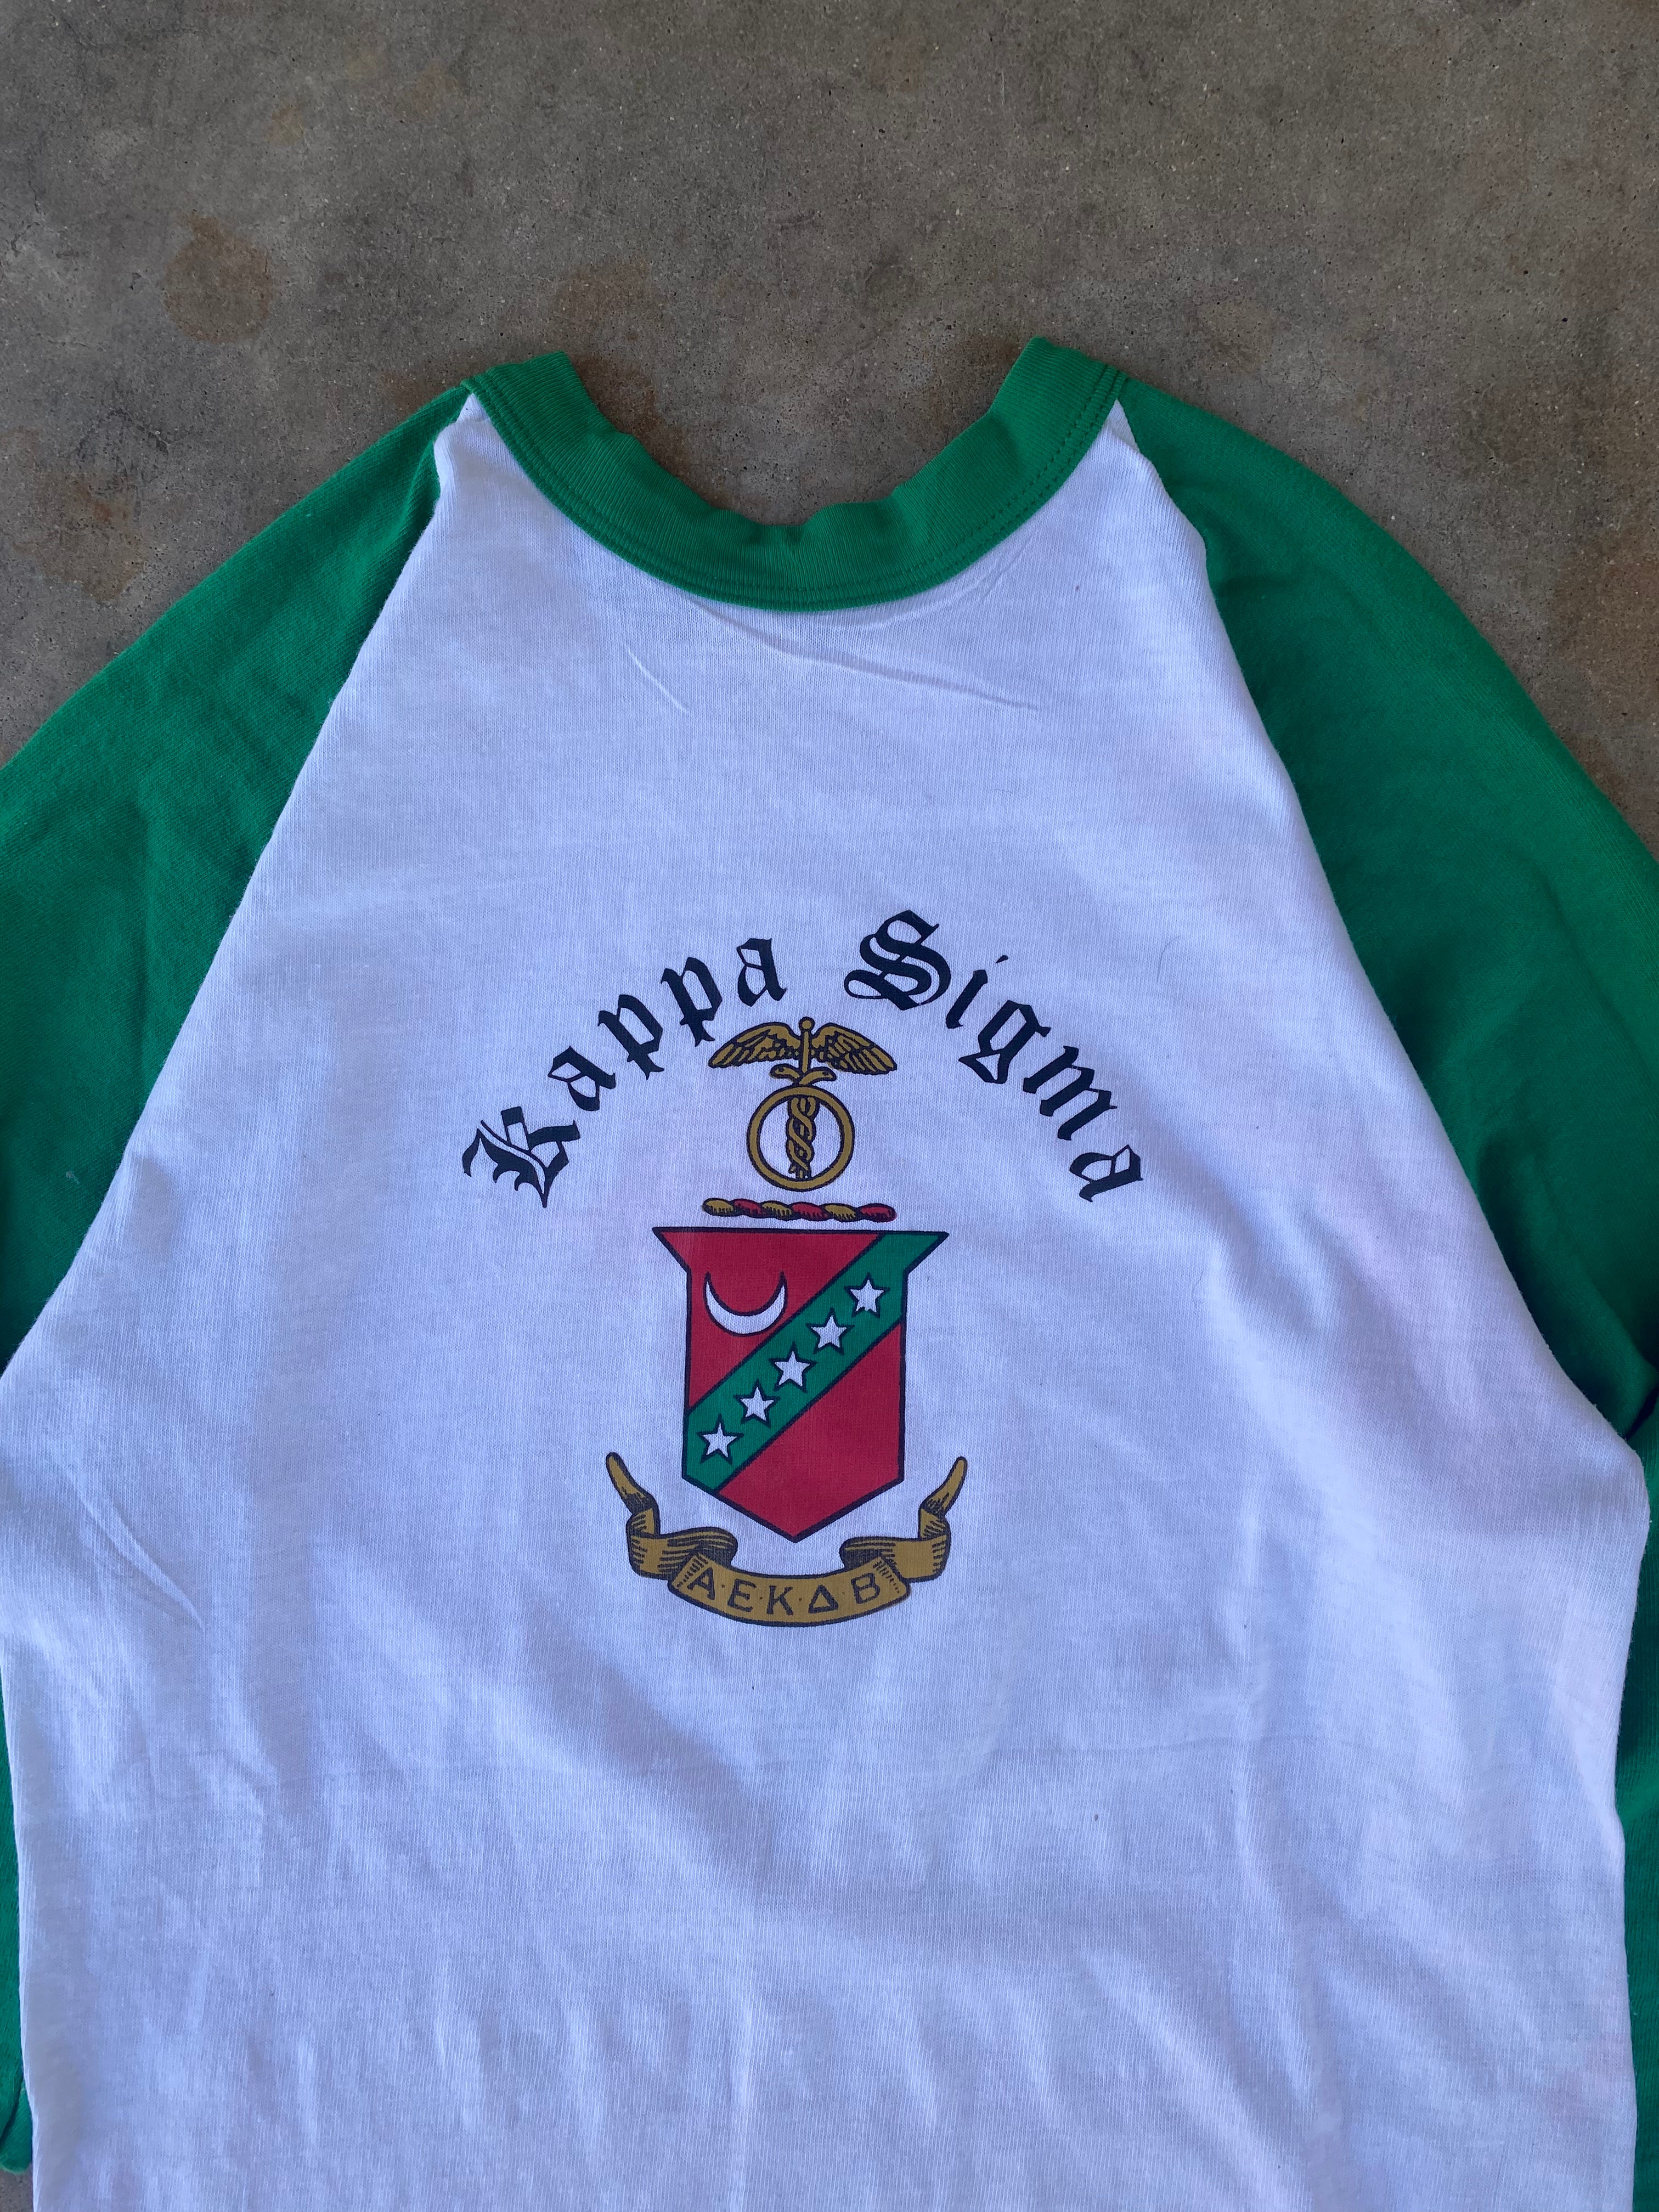 1970s Kappa Sigma Raglan T-Shirt (S)